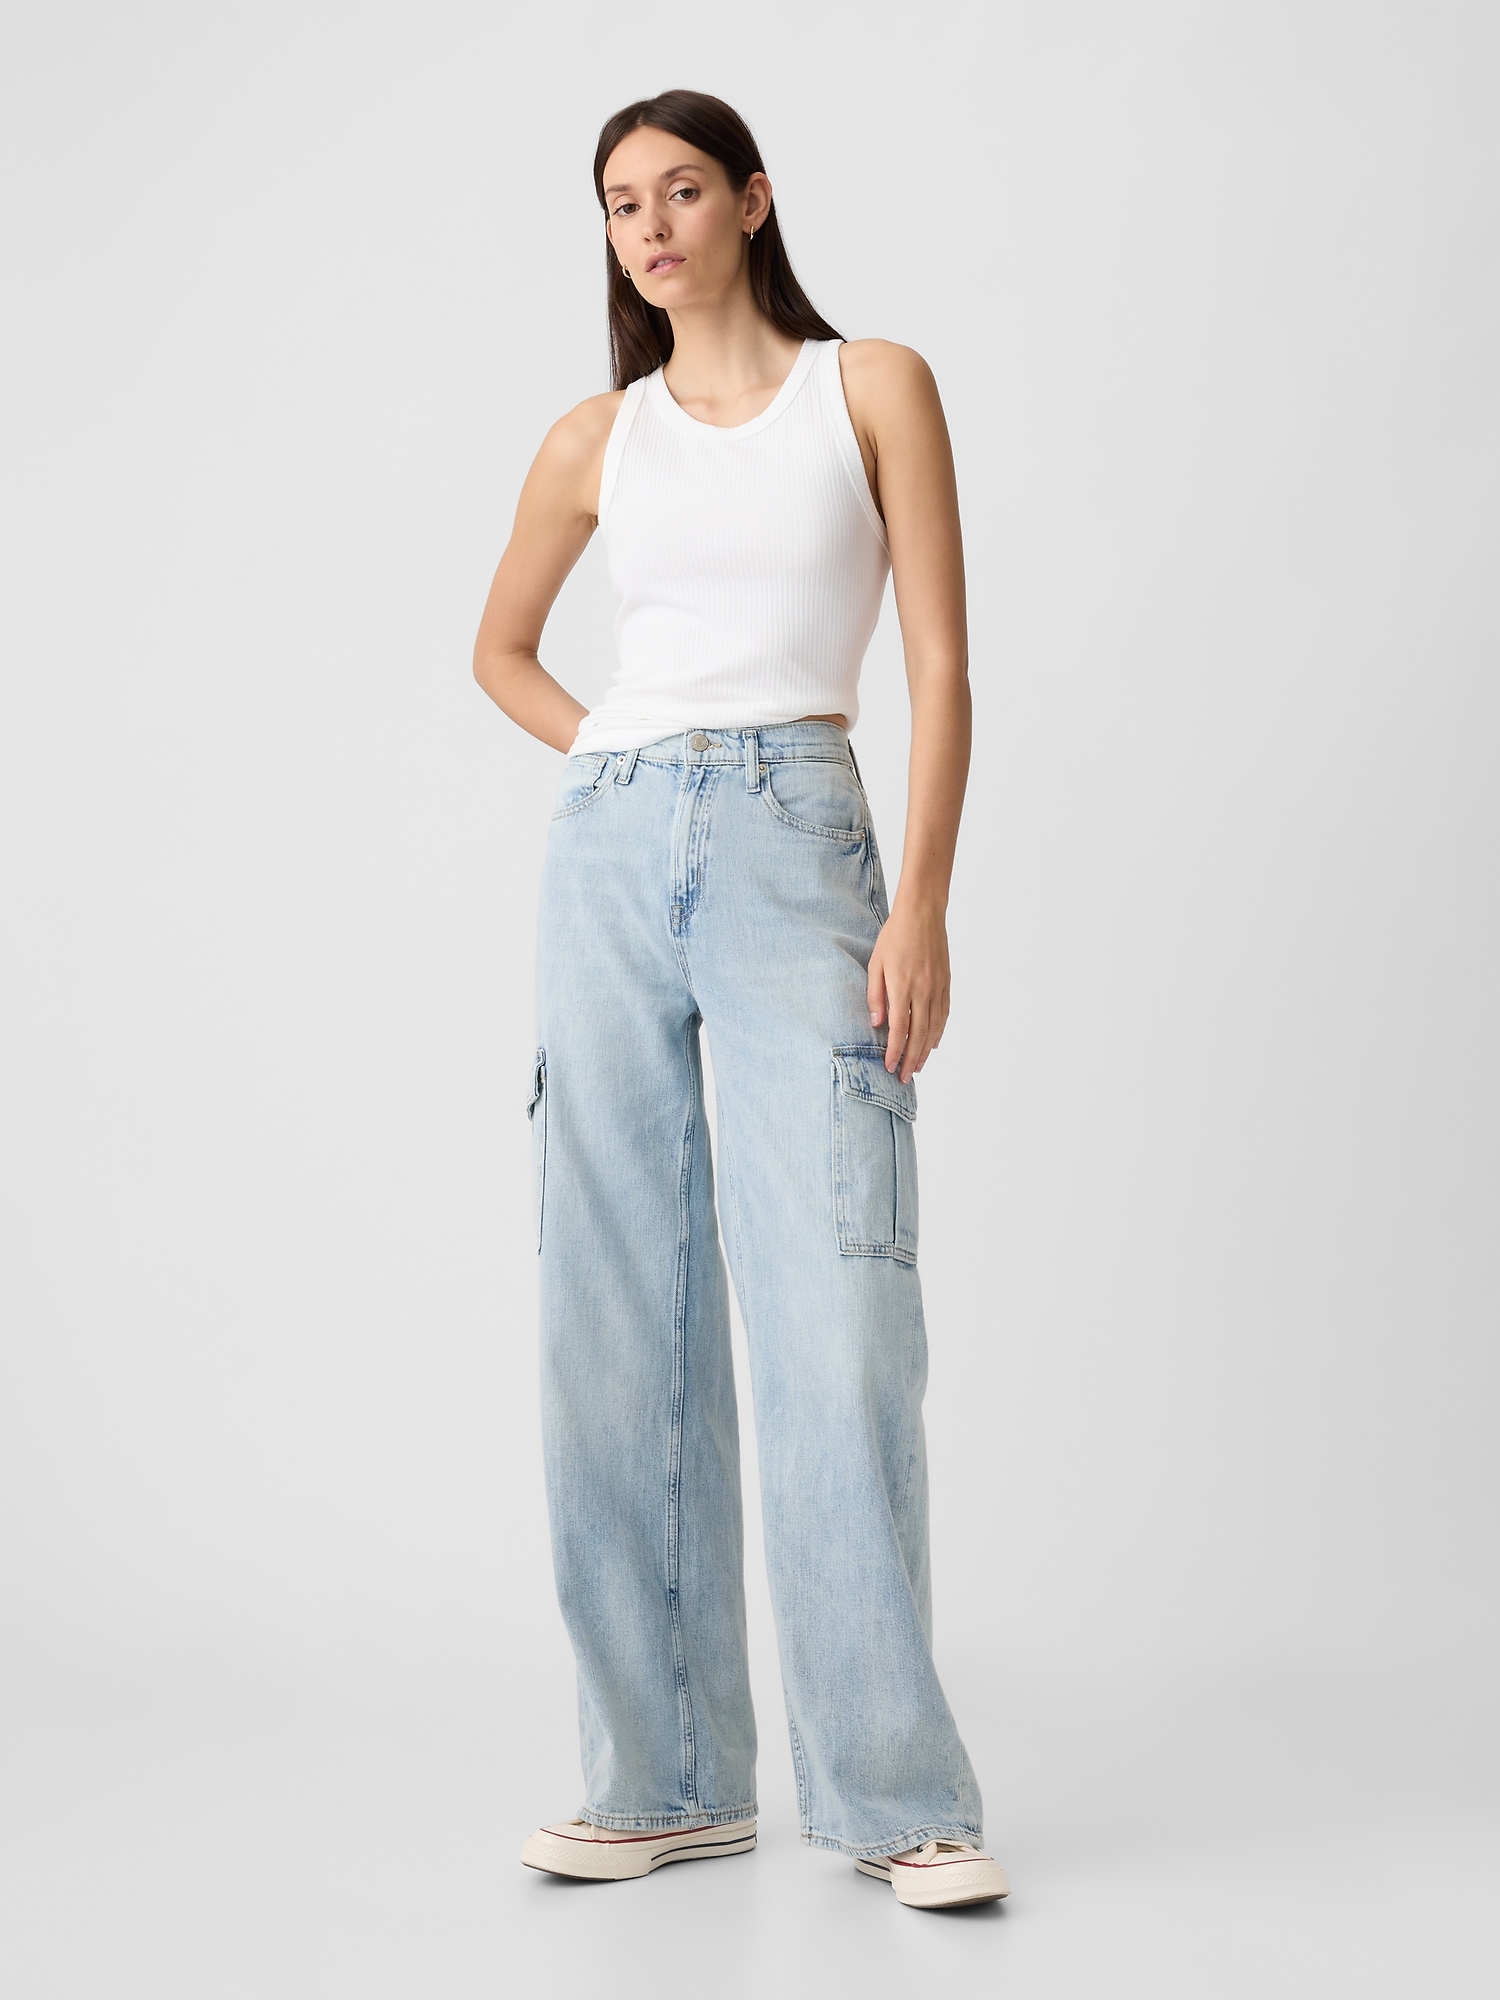 Women's Gap Stretch Skinny Soft Cotton High Rise Pants Jeans Black Size 6  Ladies